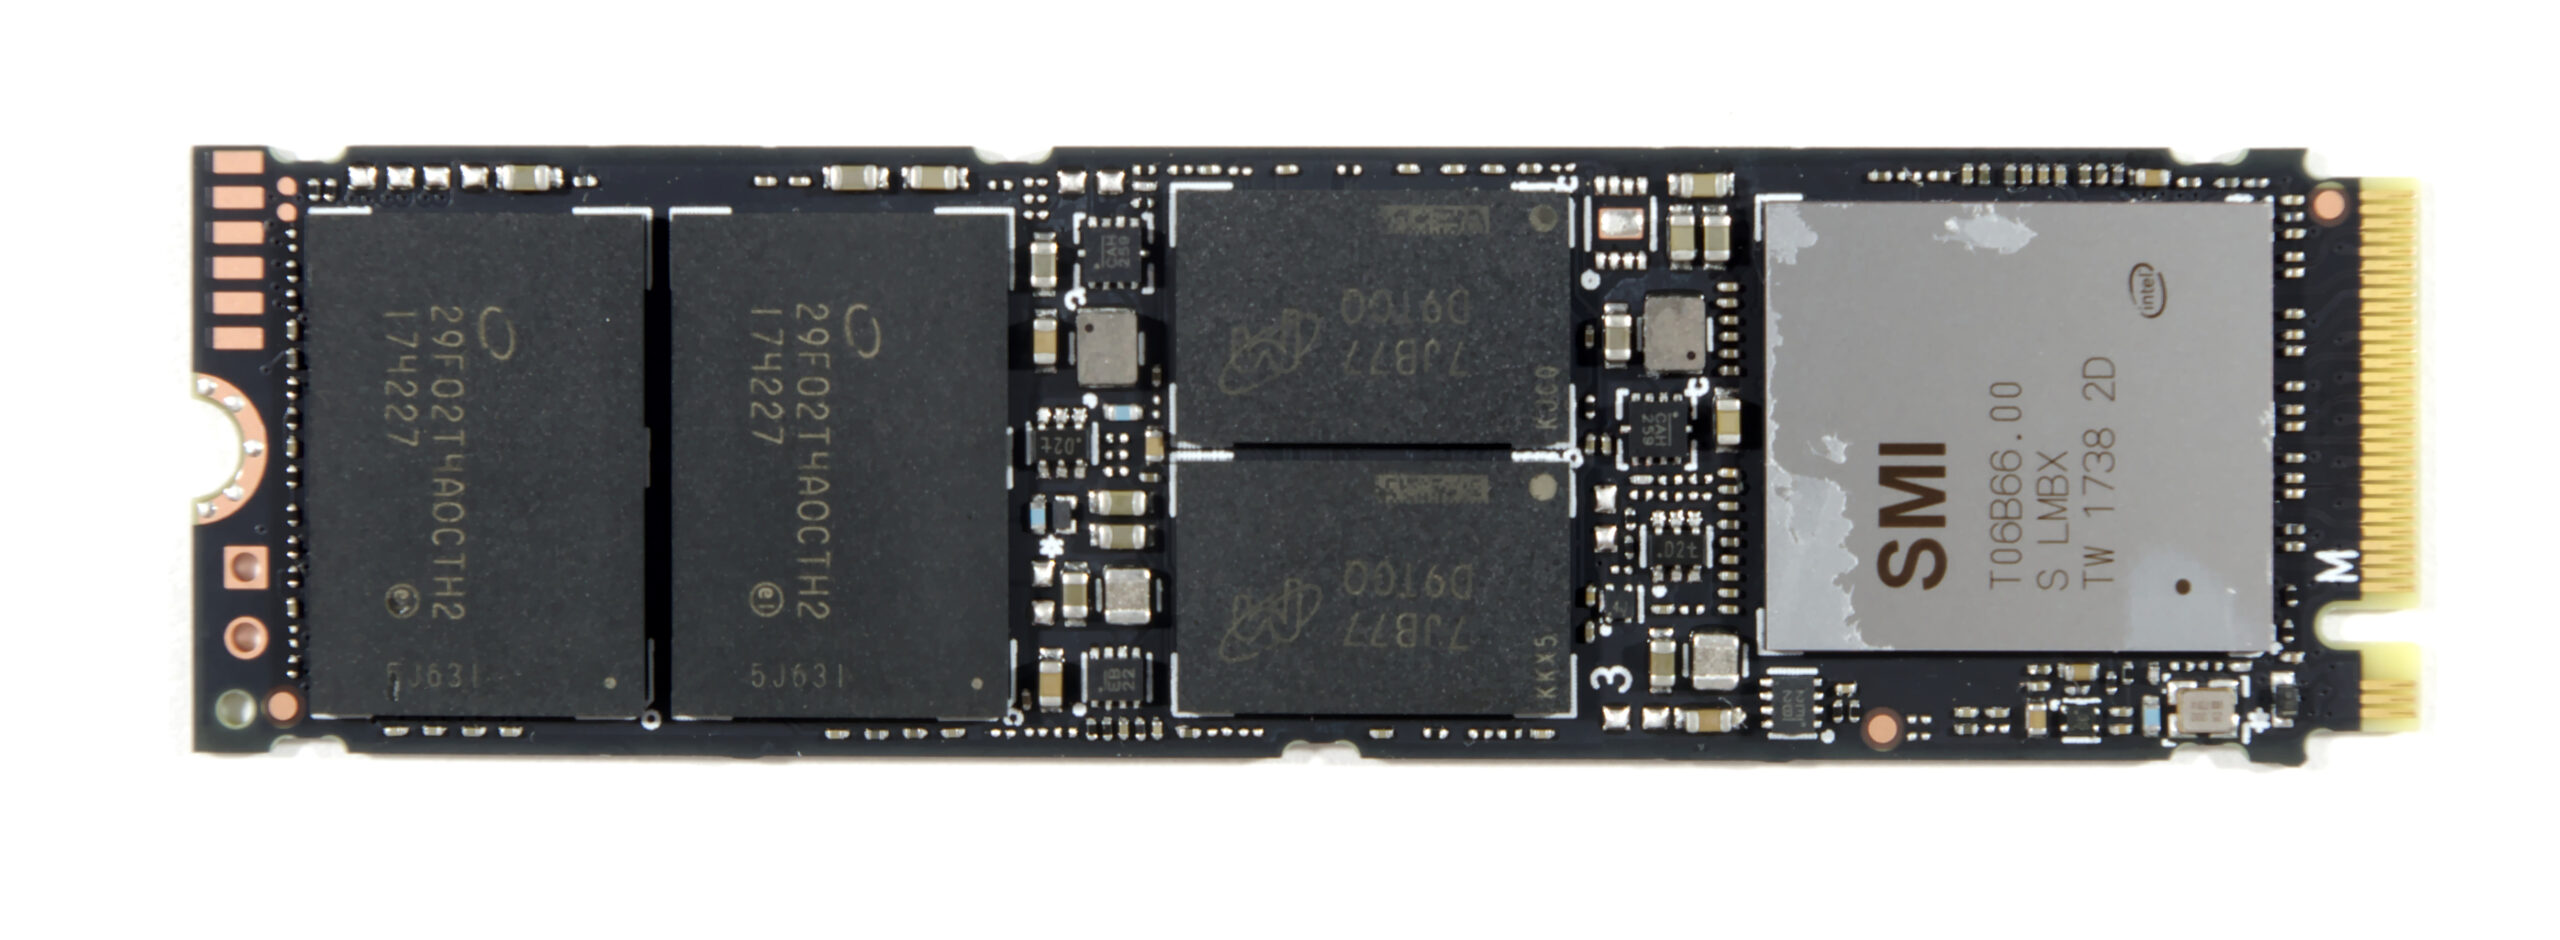 Intel 760p Series SSD review